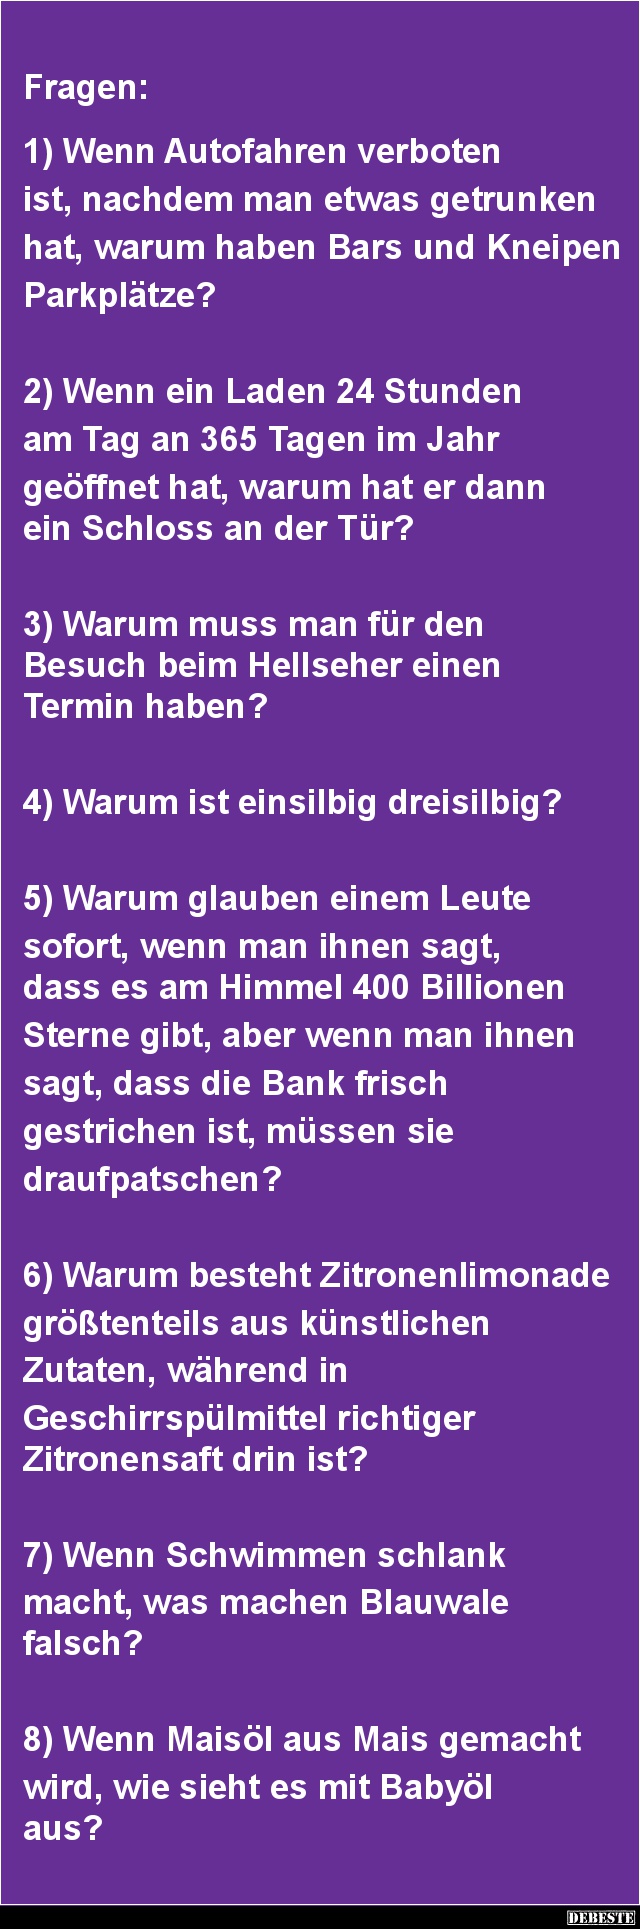 Fragen - Lustige Bilder | DEBESTE.de